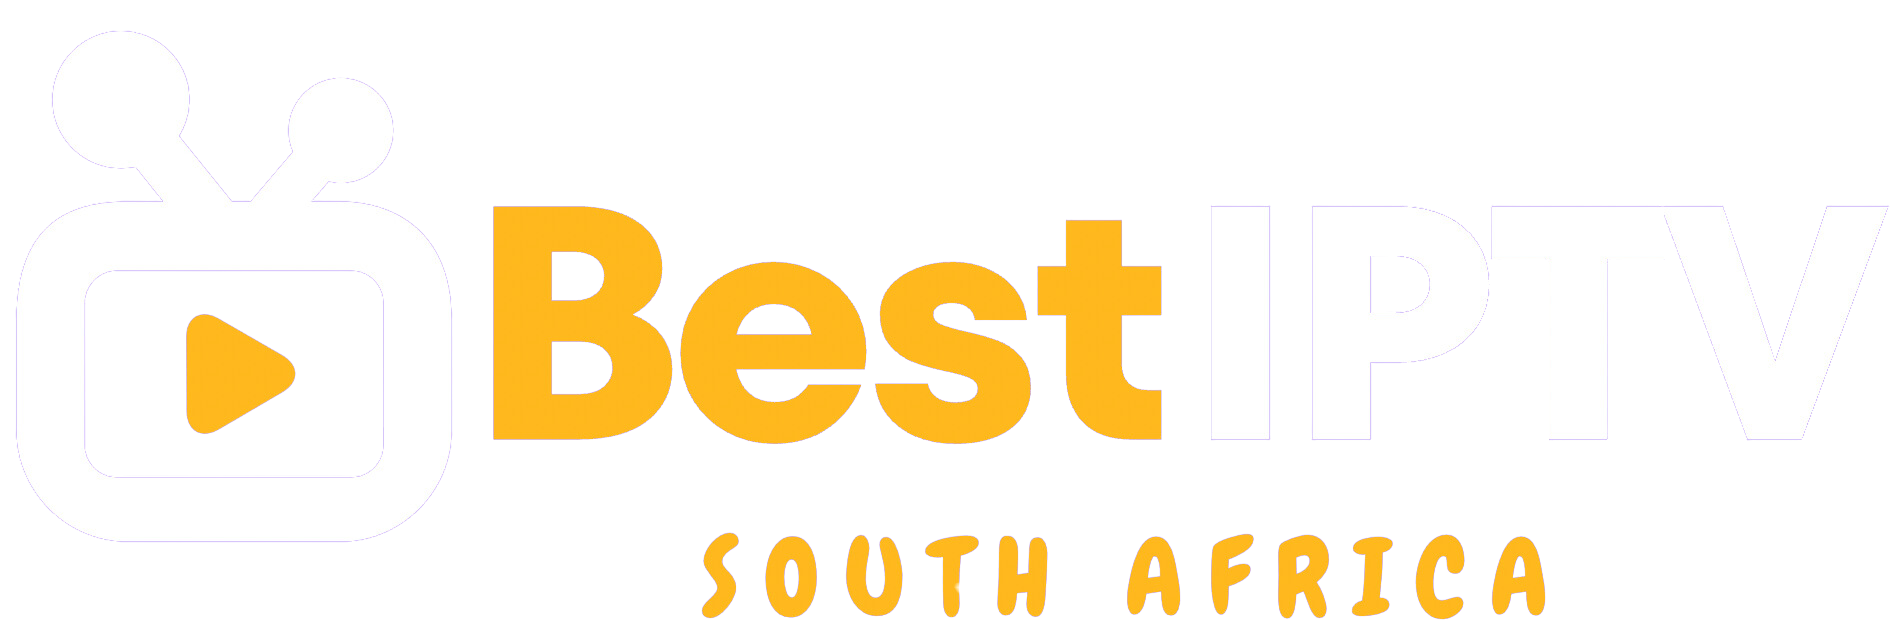 iptv south africa logo